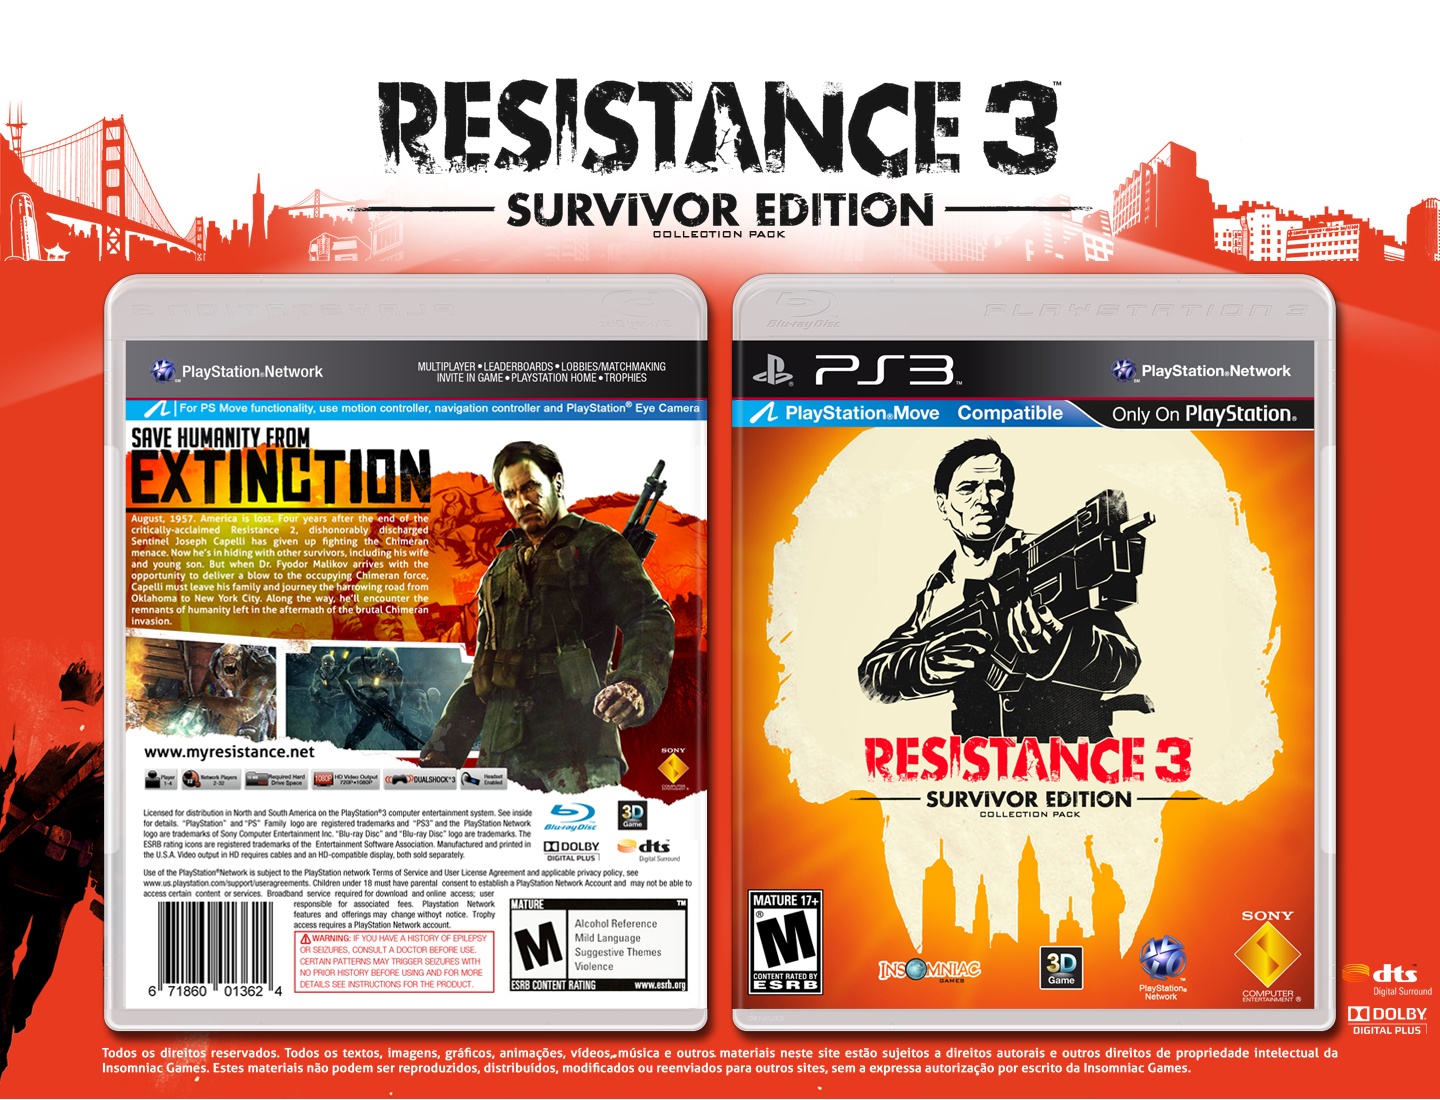 Resistance 3 Survivor Edition box cover